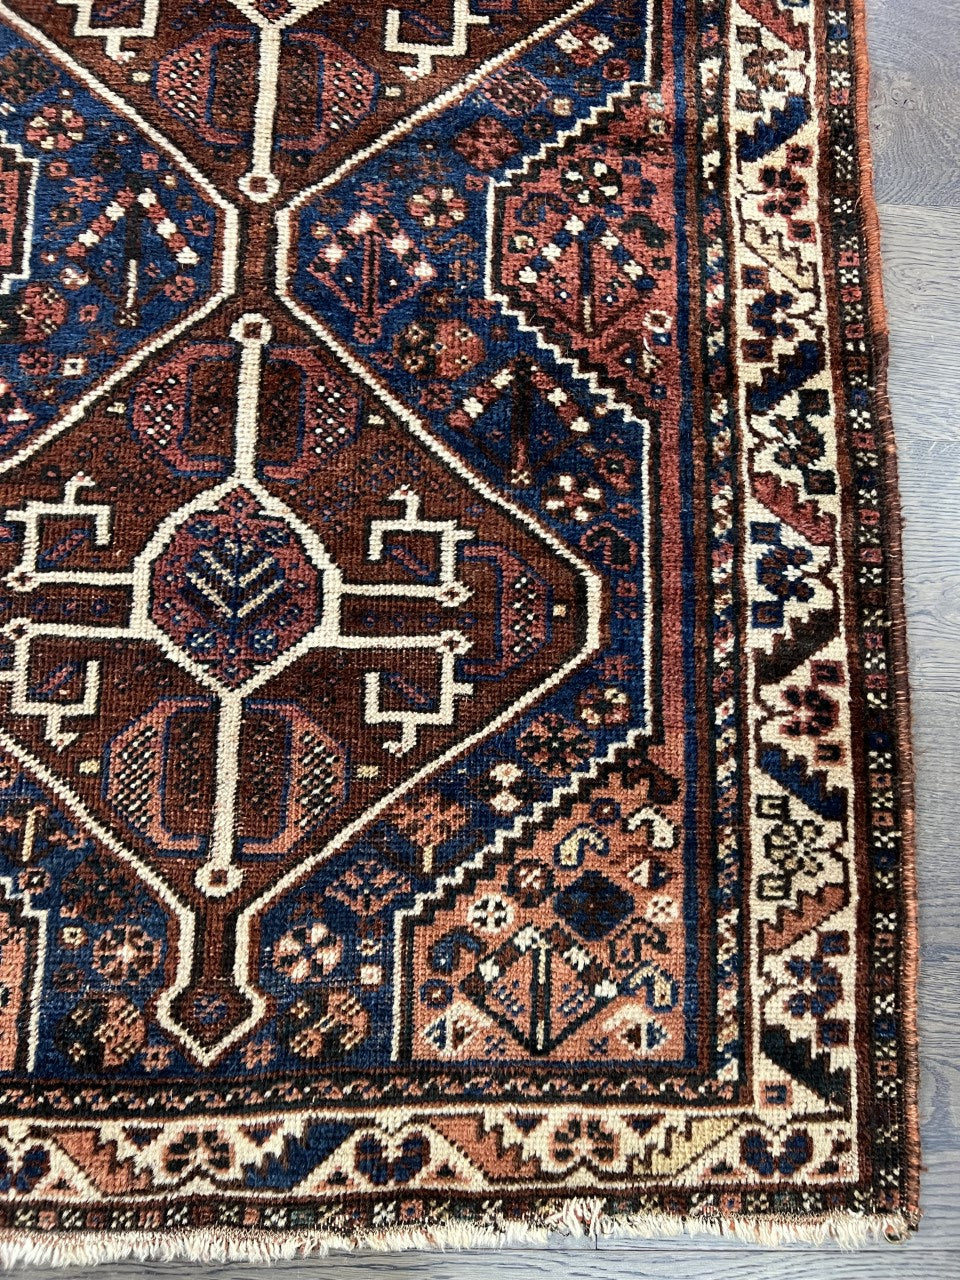 Stunning antique handmade Qashqai rug